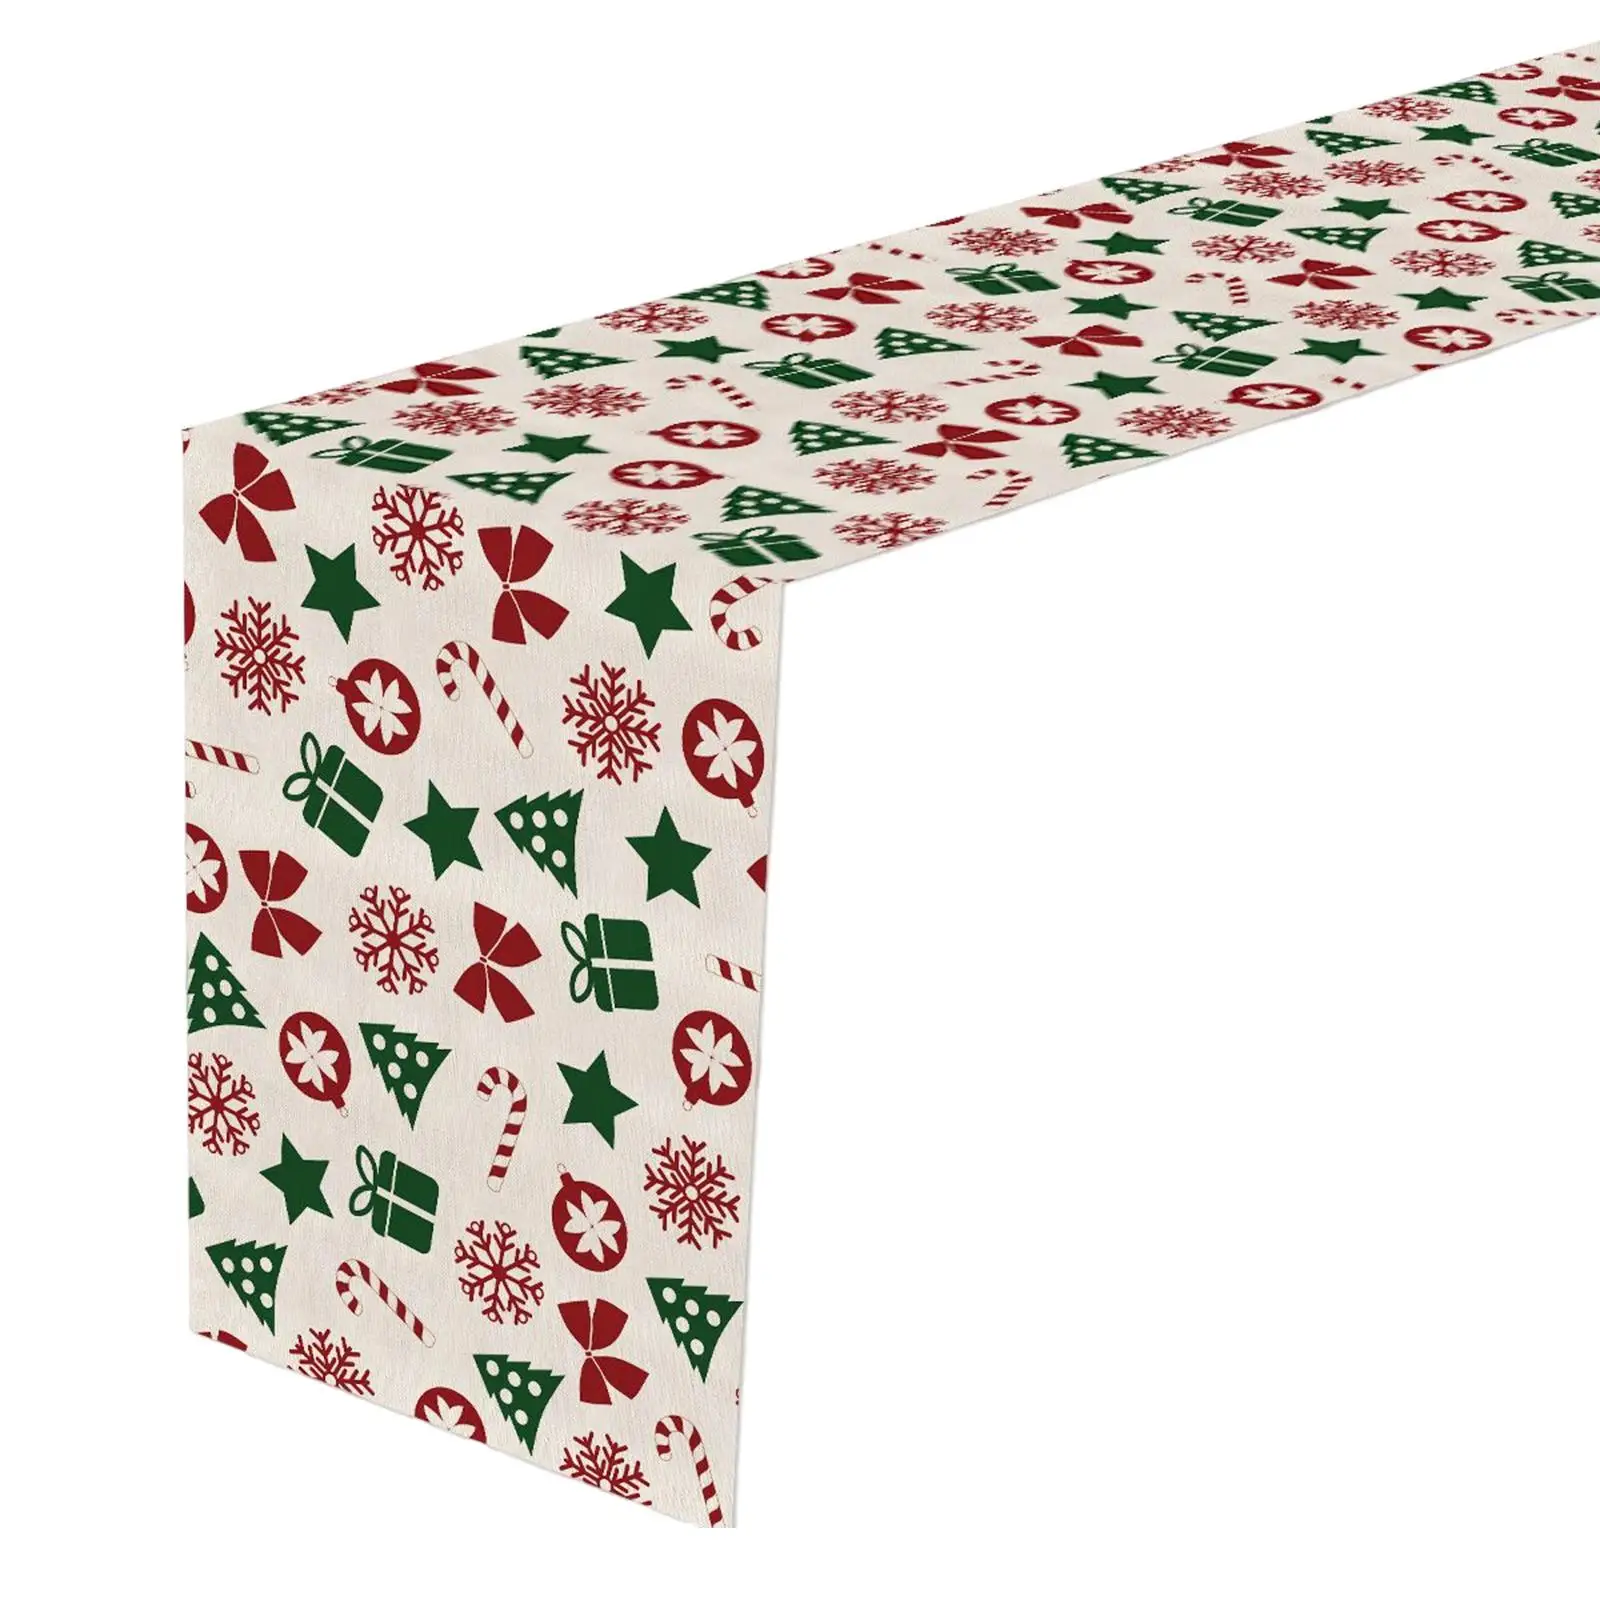 Linen Christmas table cloth Table Mat Waterproof Seasonal Winter Holiday for